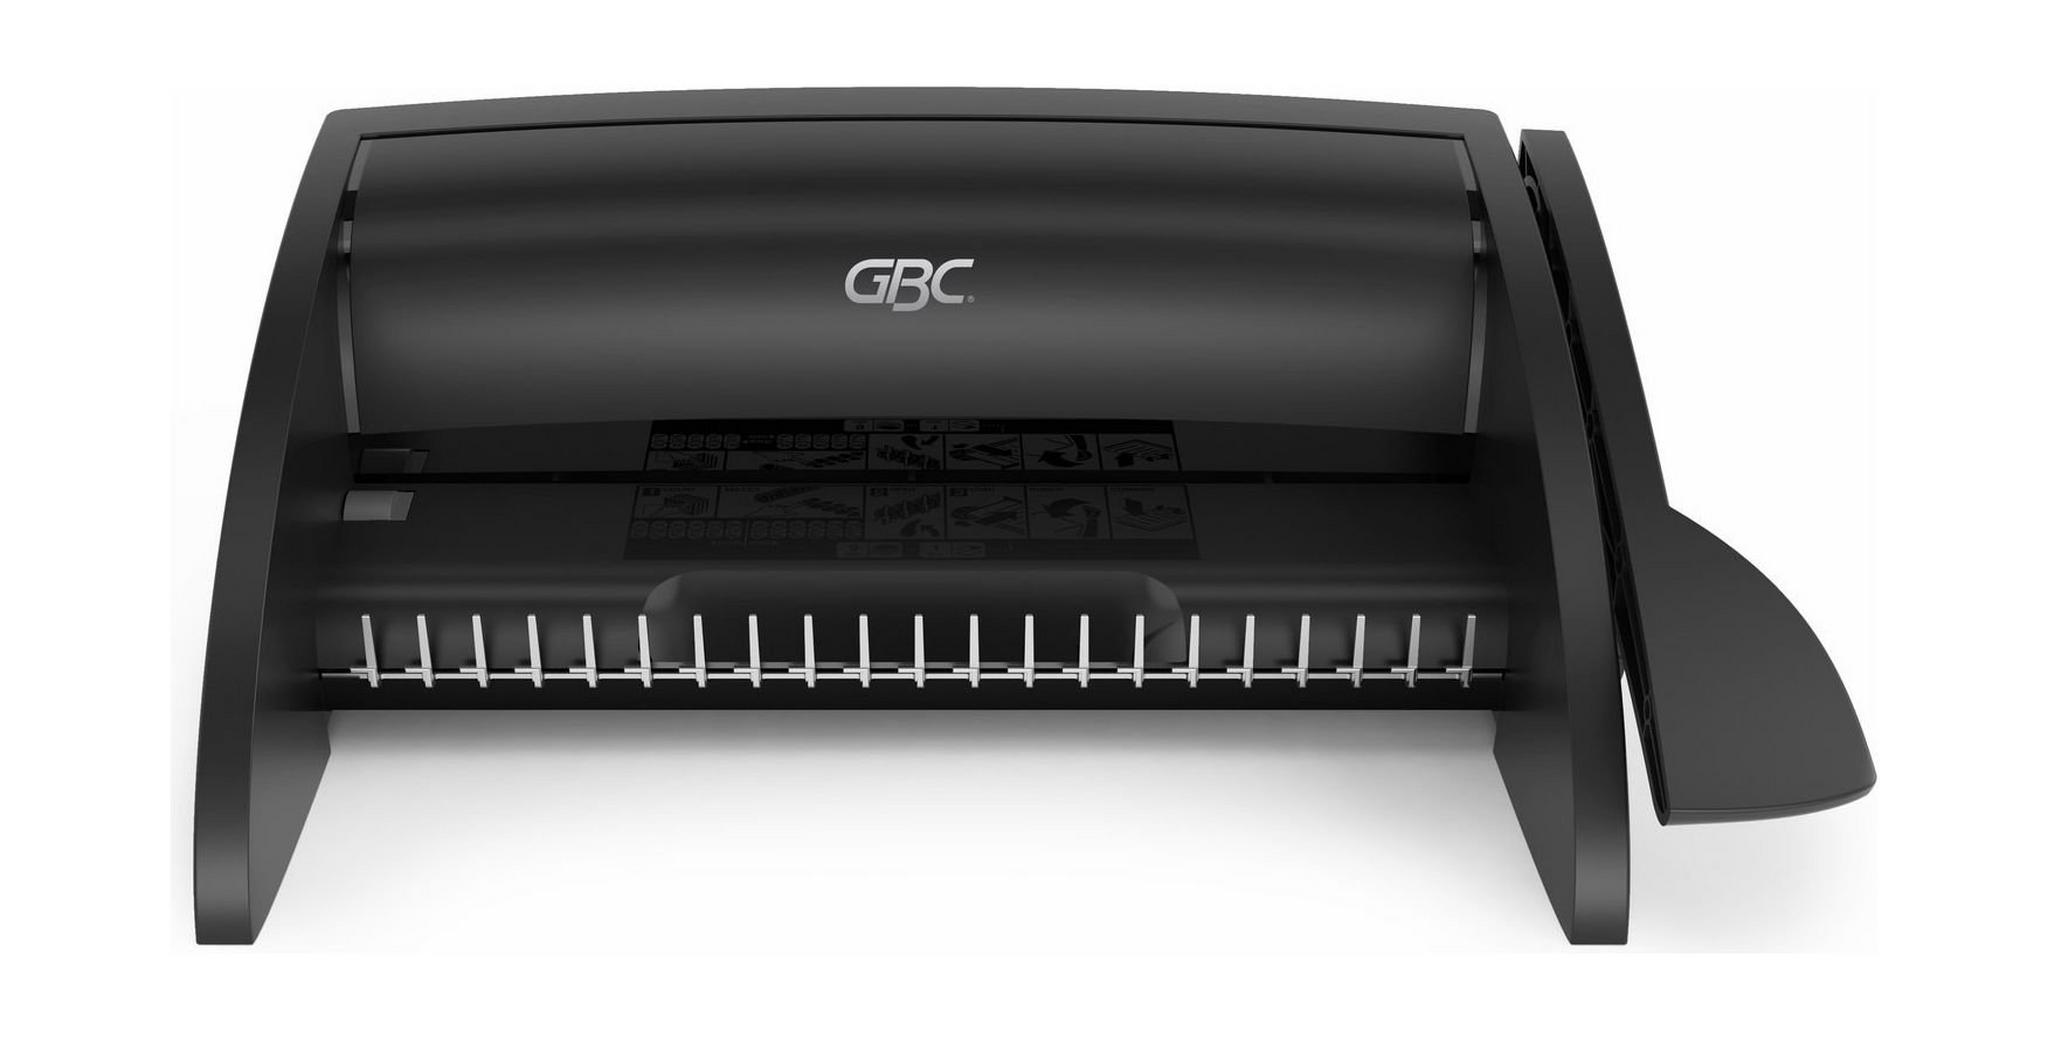 GBC CombBind C100 Binding Machine 19mm Comb Punch Capacity 9 Sheets, Bind Capacity 160 Sheets - Black (4401843)